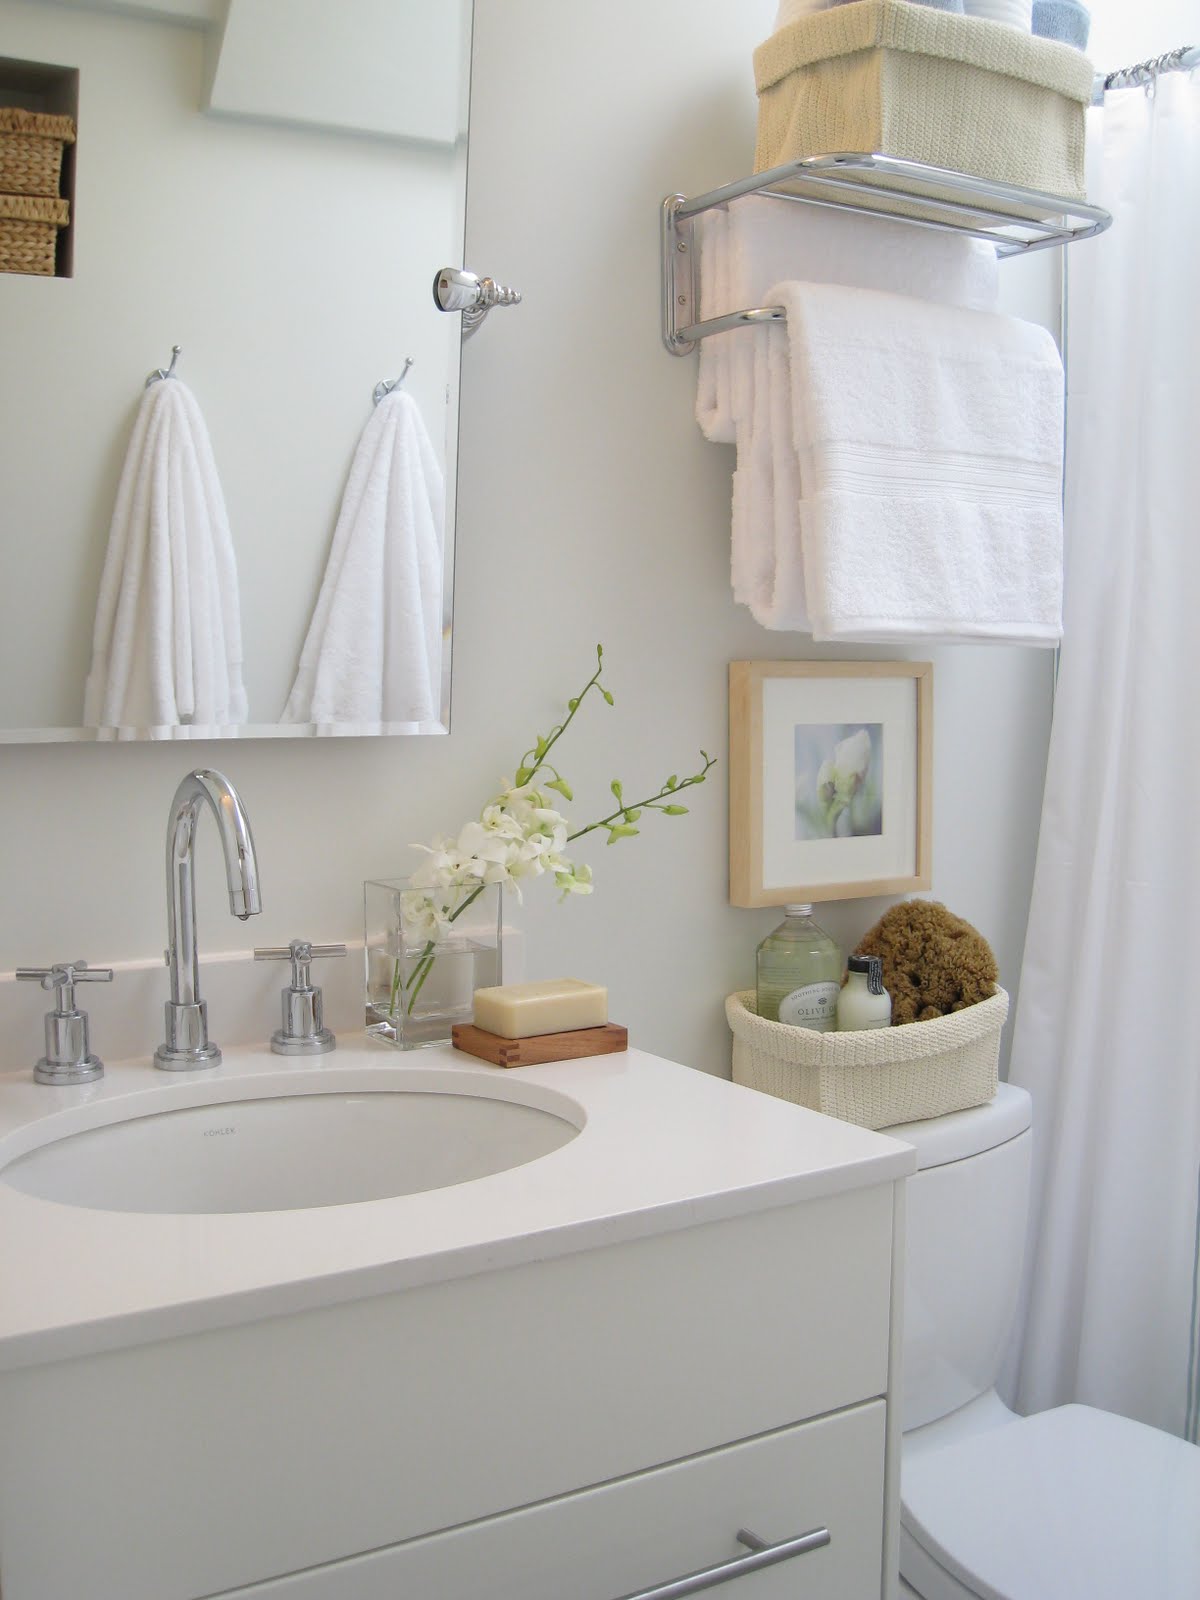 bathroom shower heads Victorian Row House: A Designer Reno on A DIY Budget - Part 4